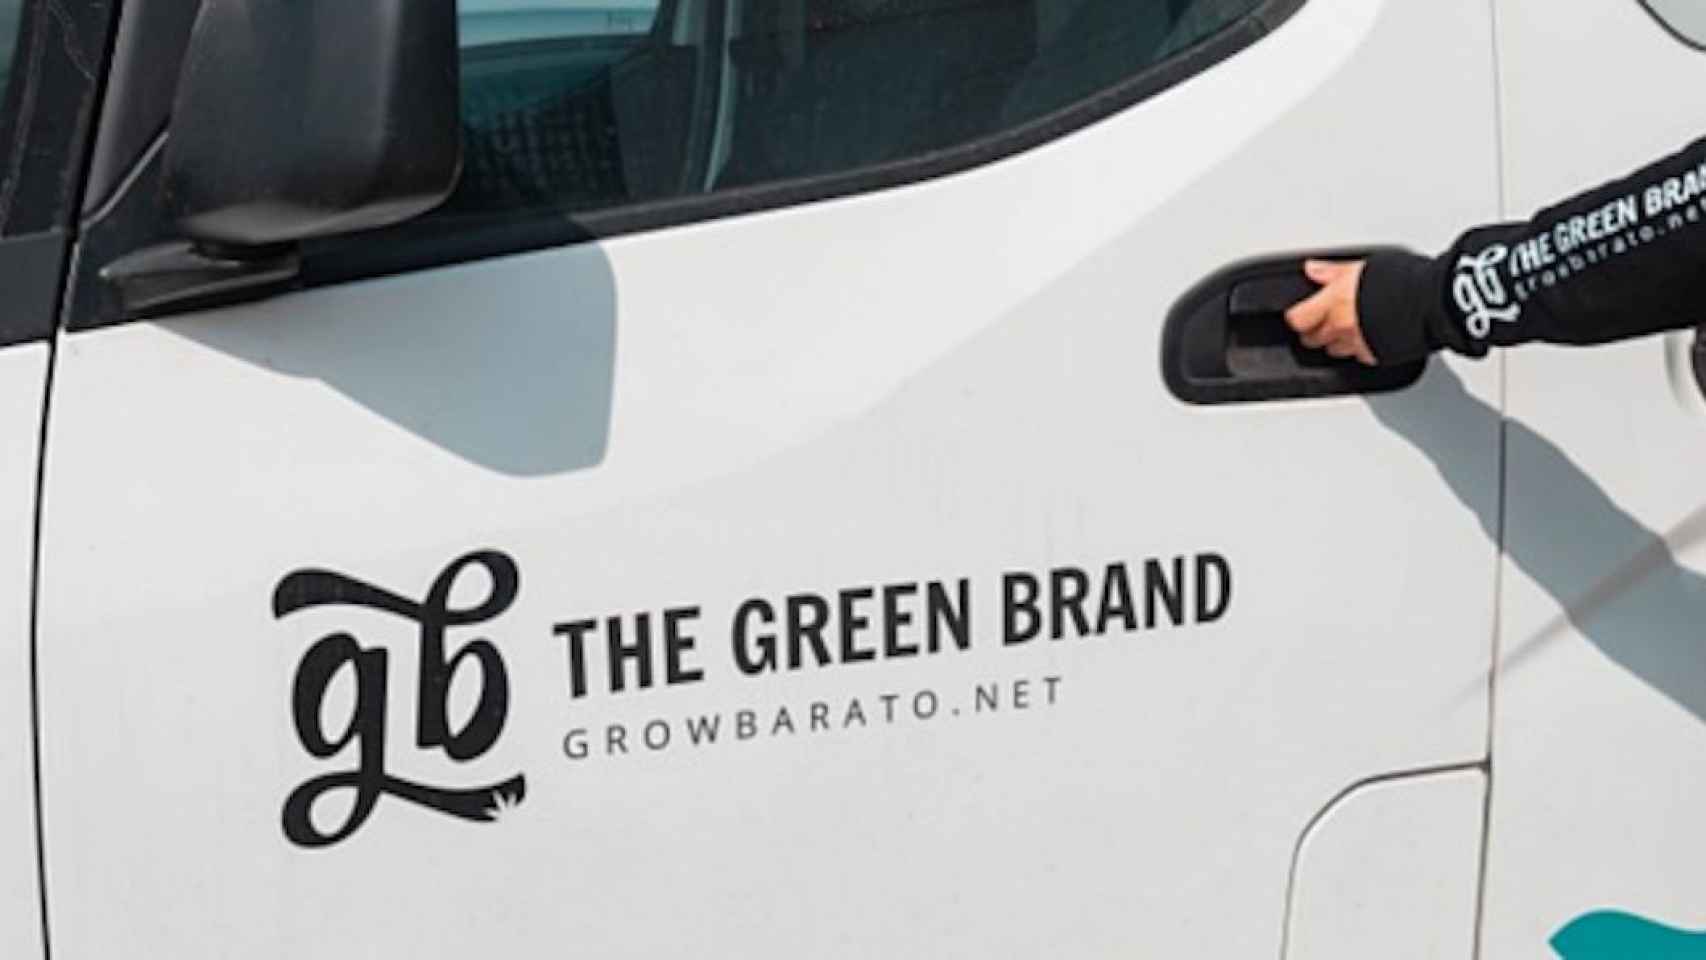 Vehículo de reparto de GB The Green Brand